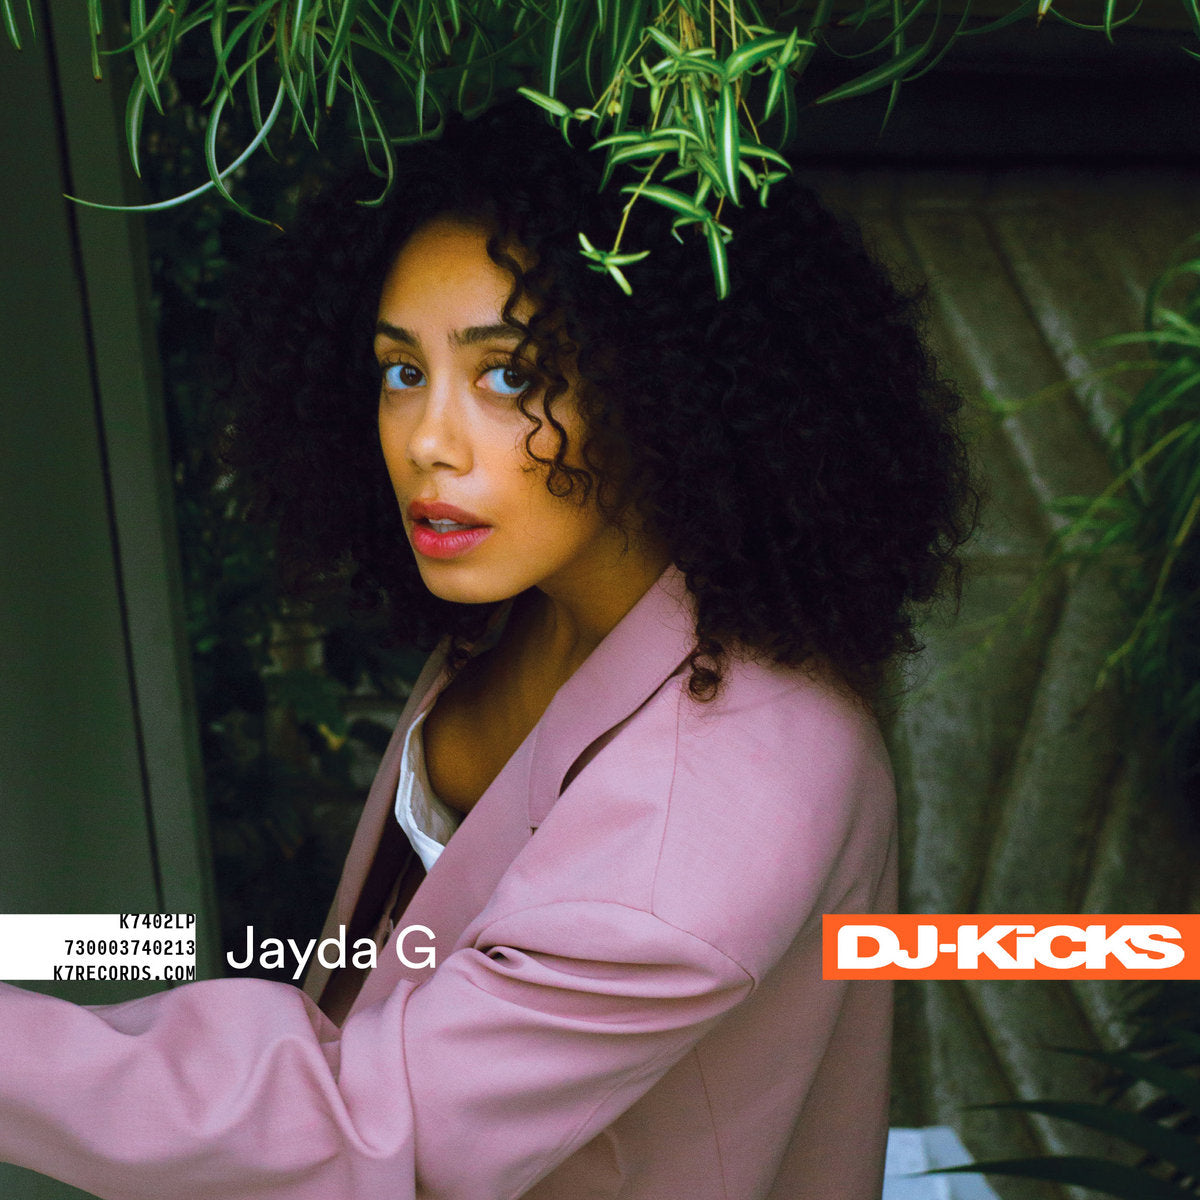 DJ-Kicks: Jayda G (New 2LP)